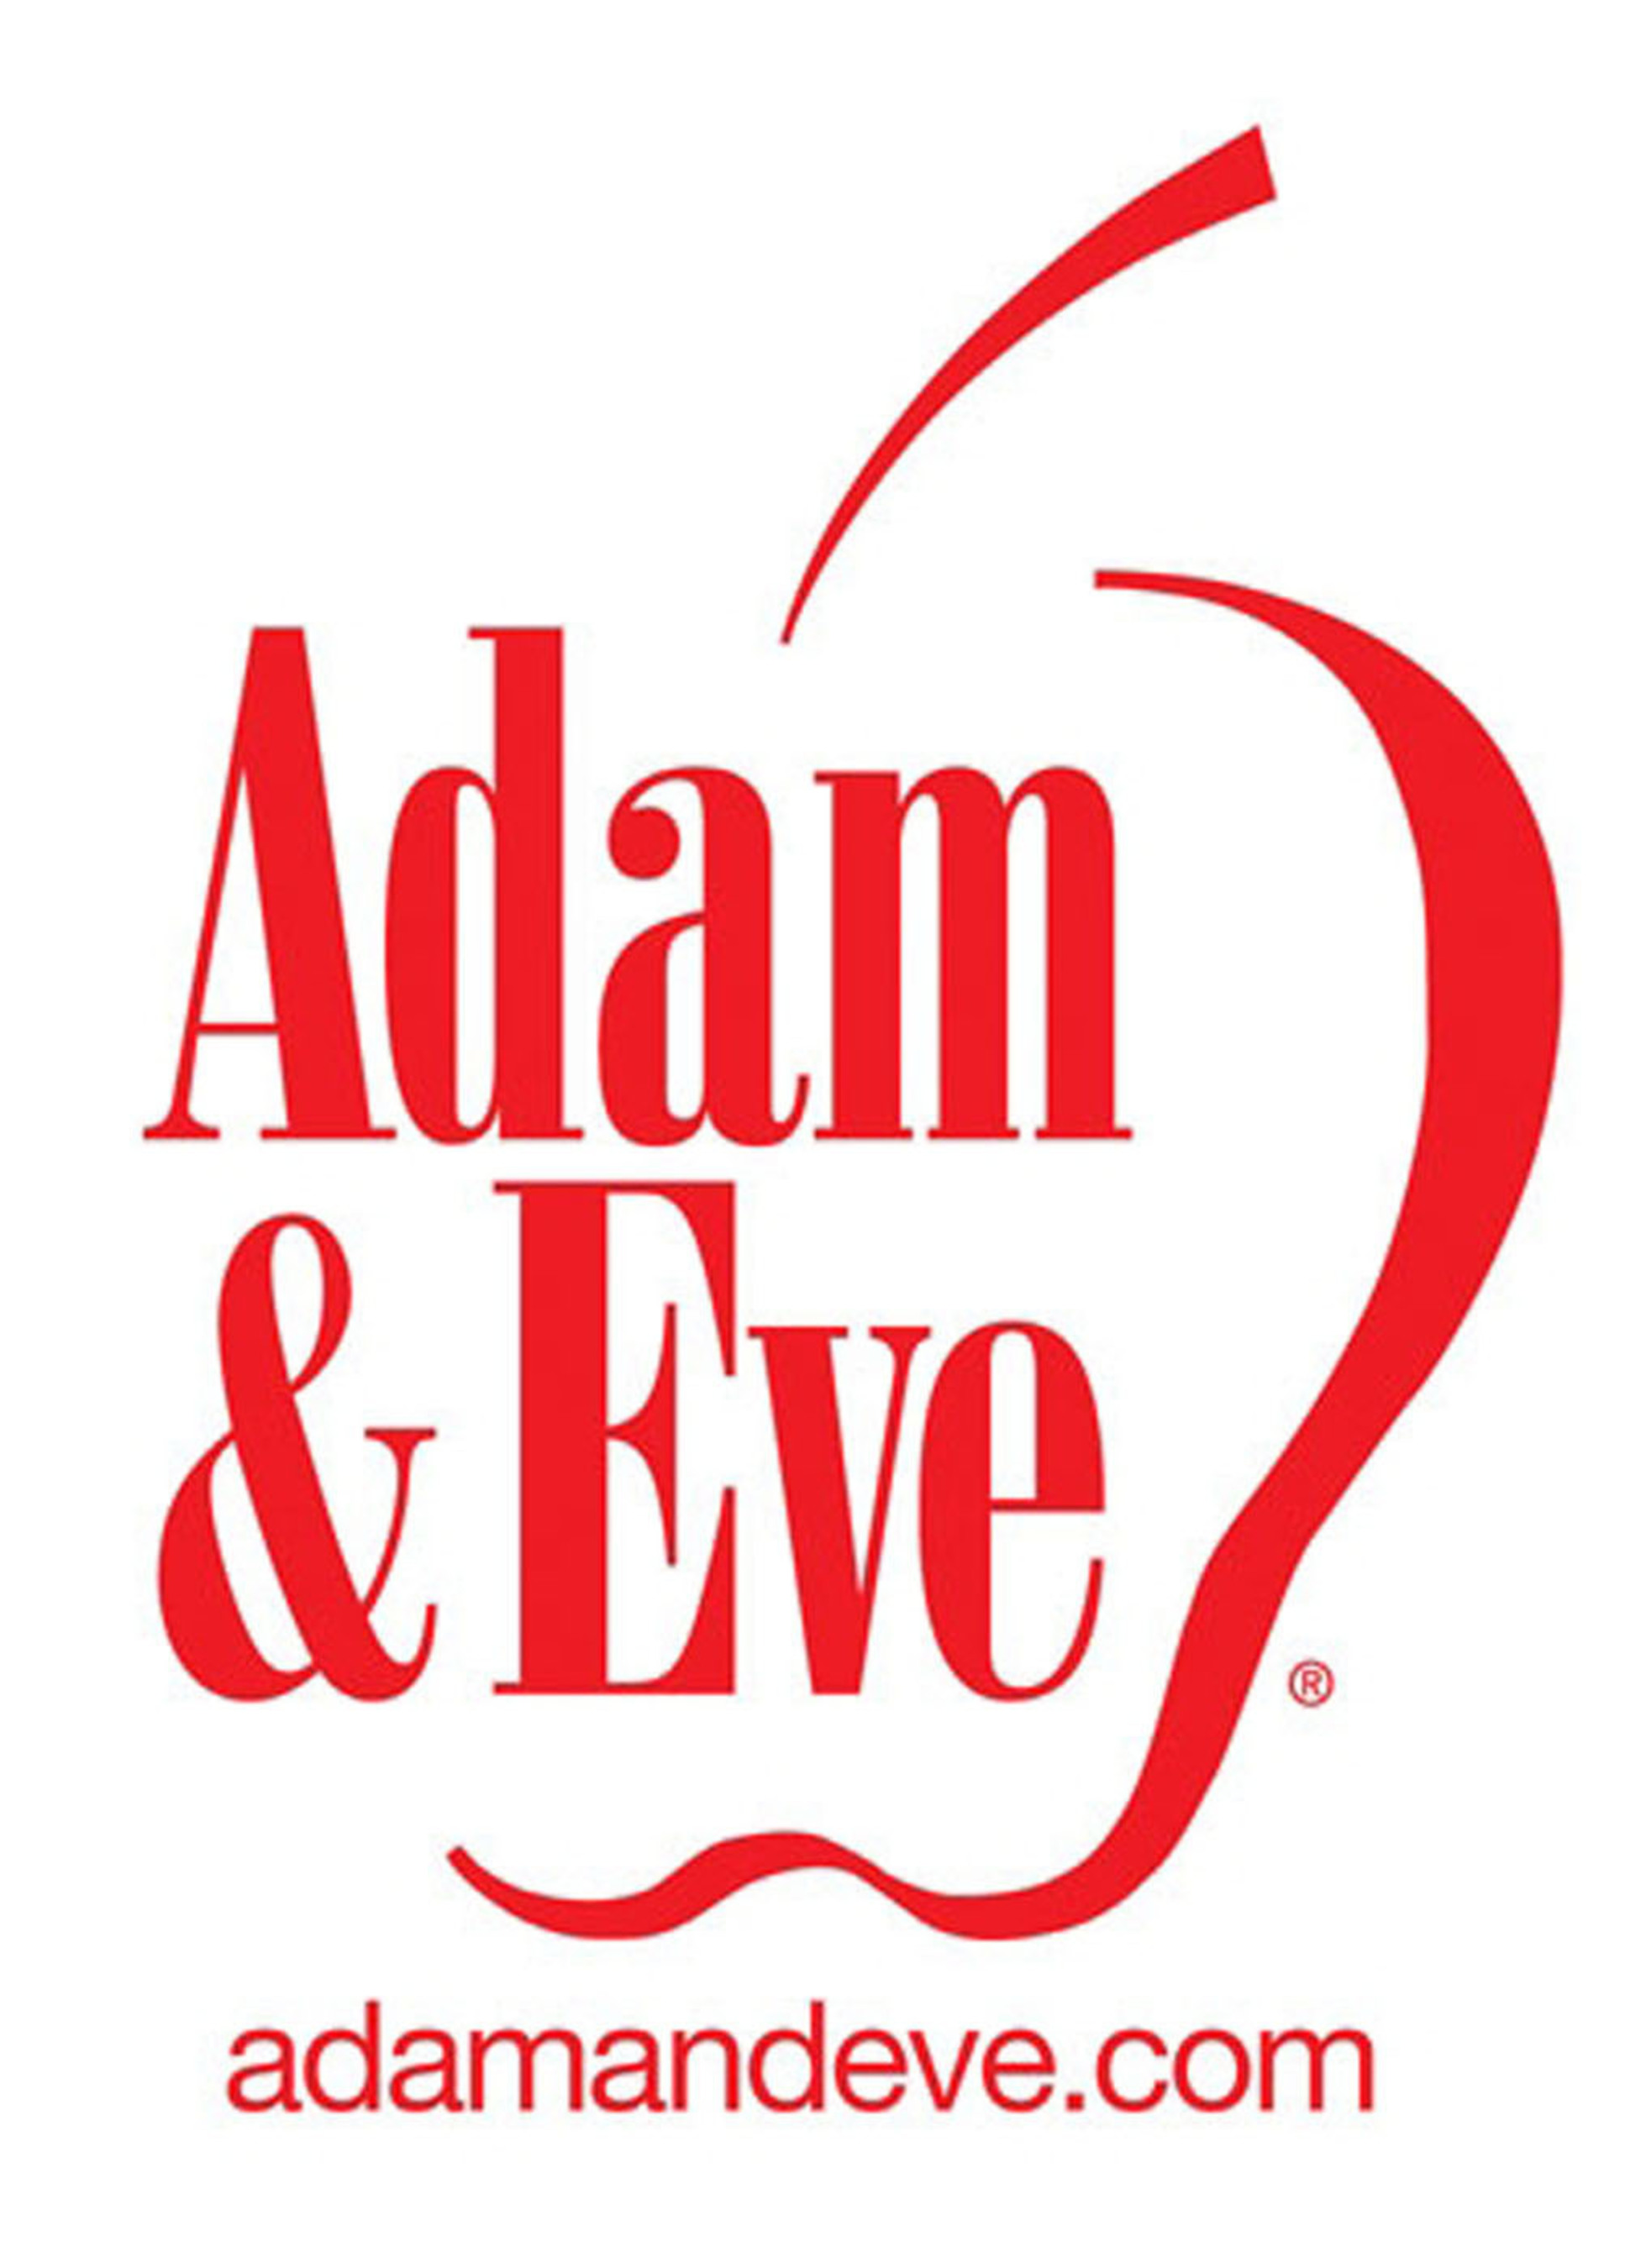 Adam & Eve LOGO